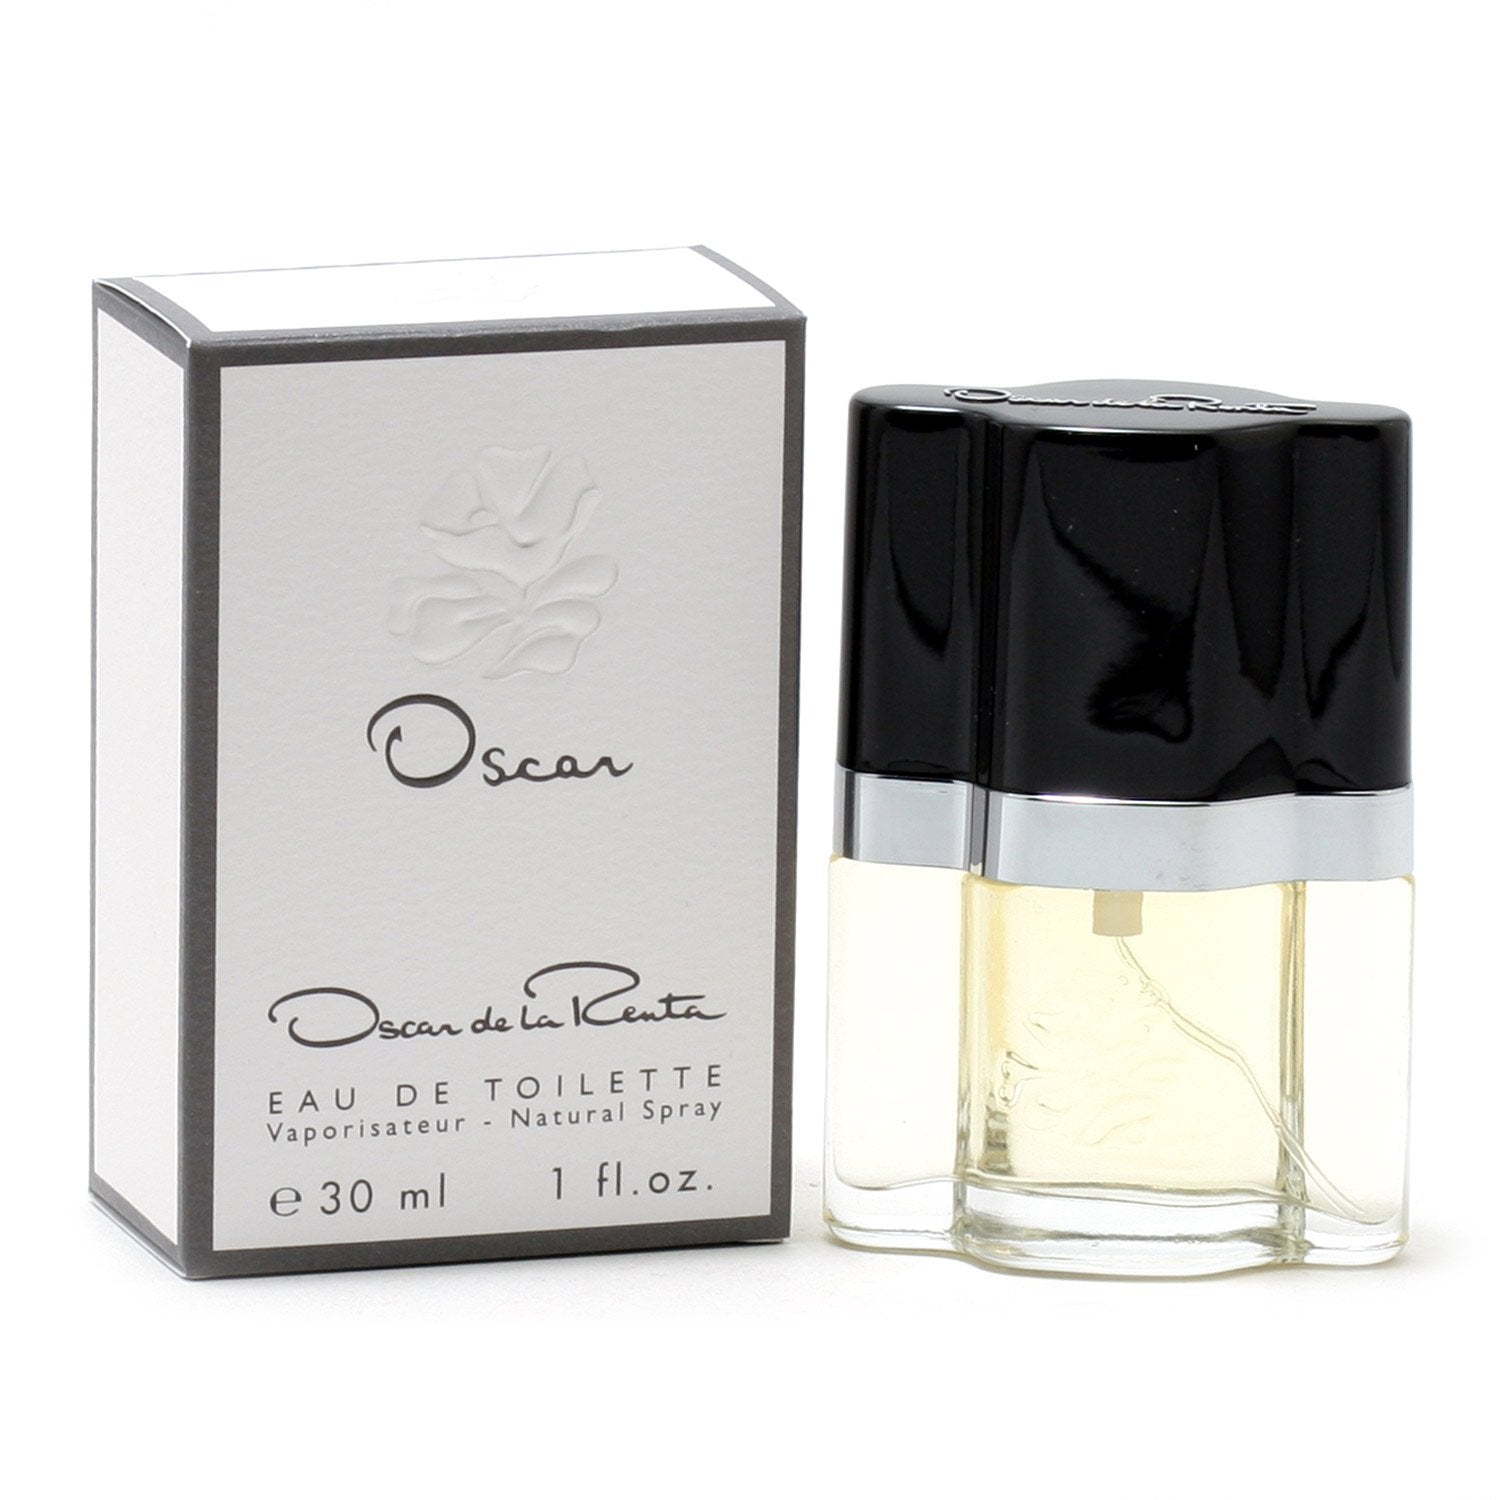 Perfume - OSCAR FOR WOMEN OSCAR DE LA RENTA  - EAU DE TOILETTE SPRAY